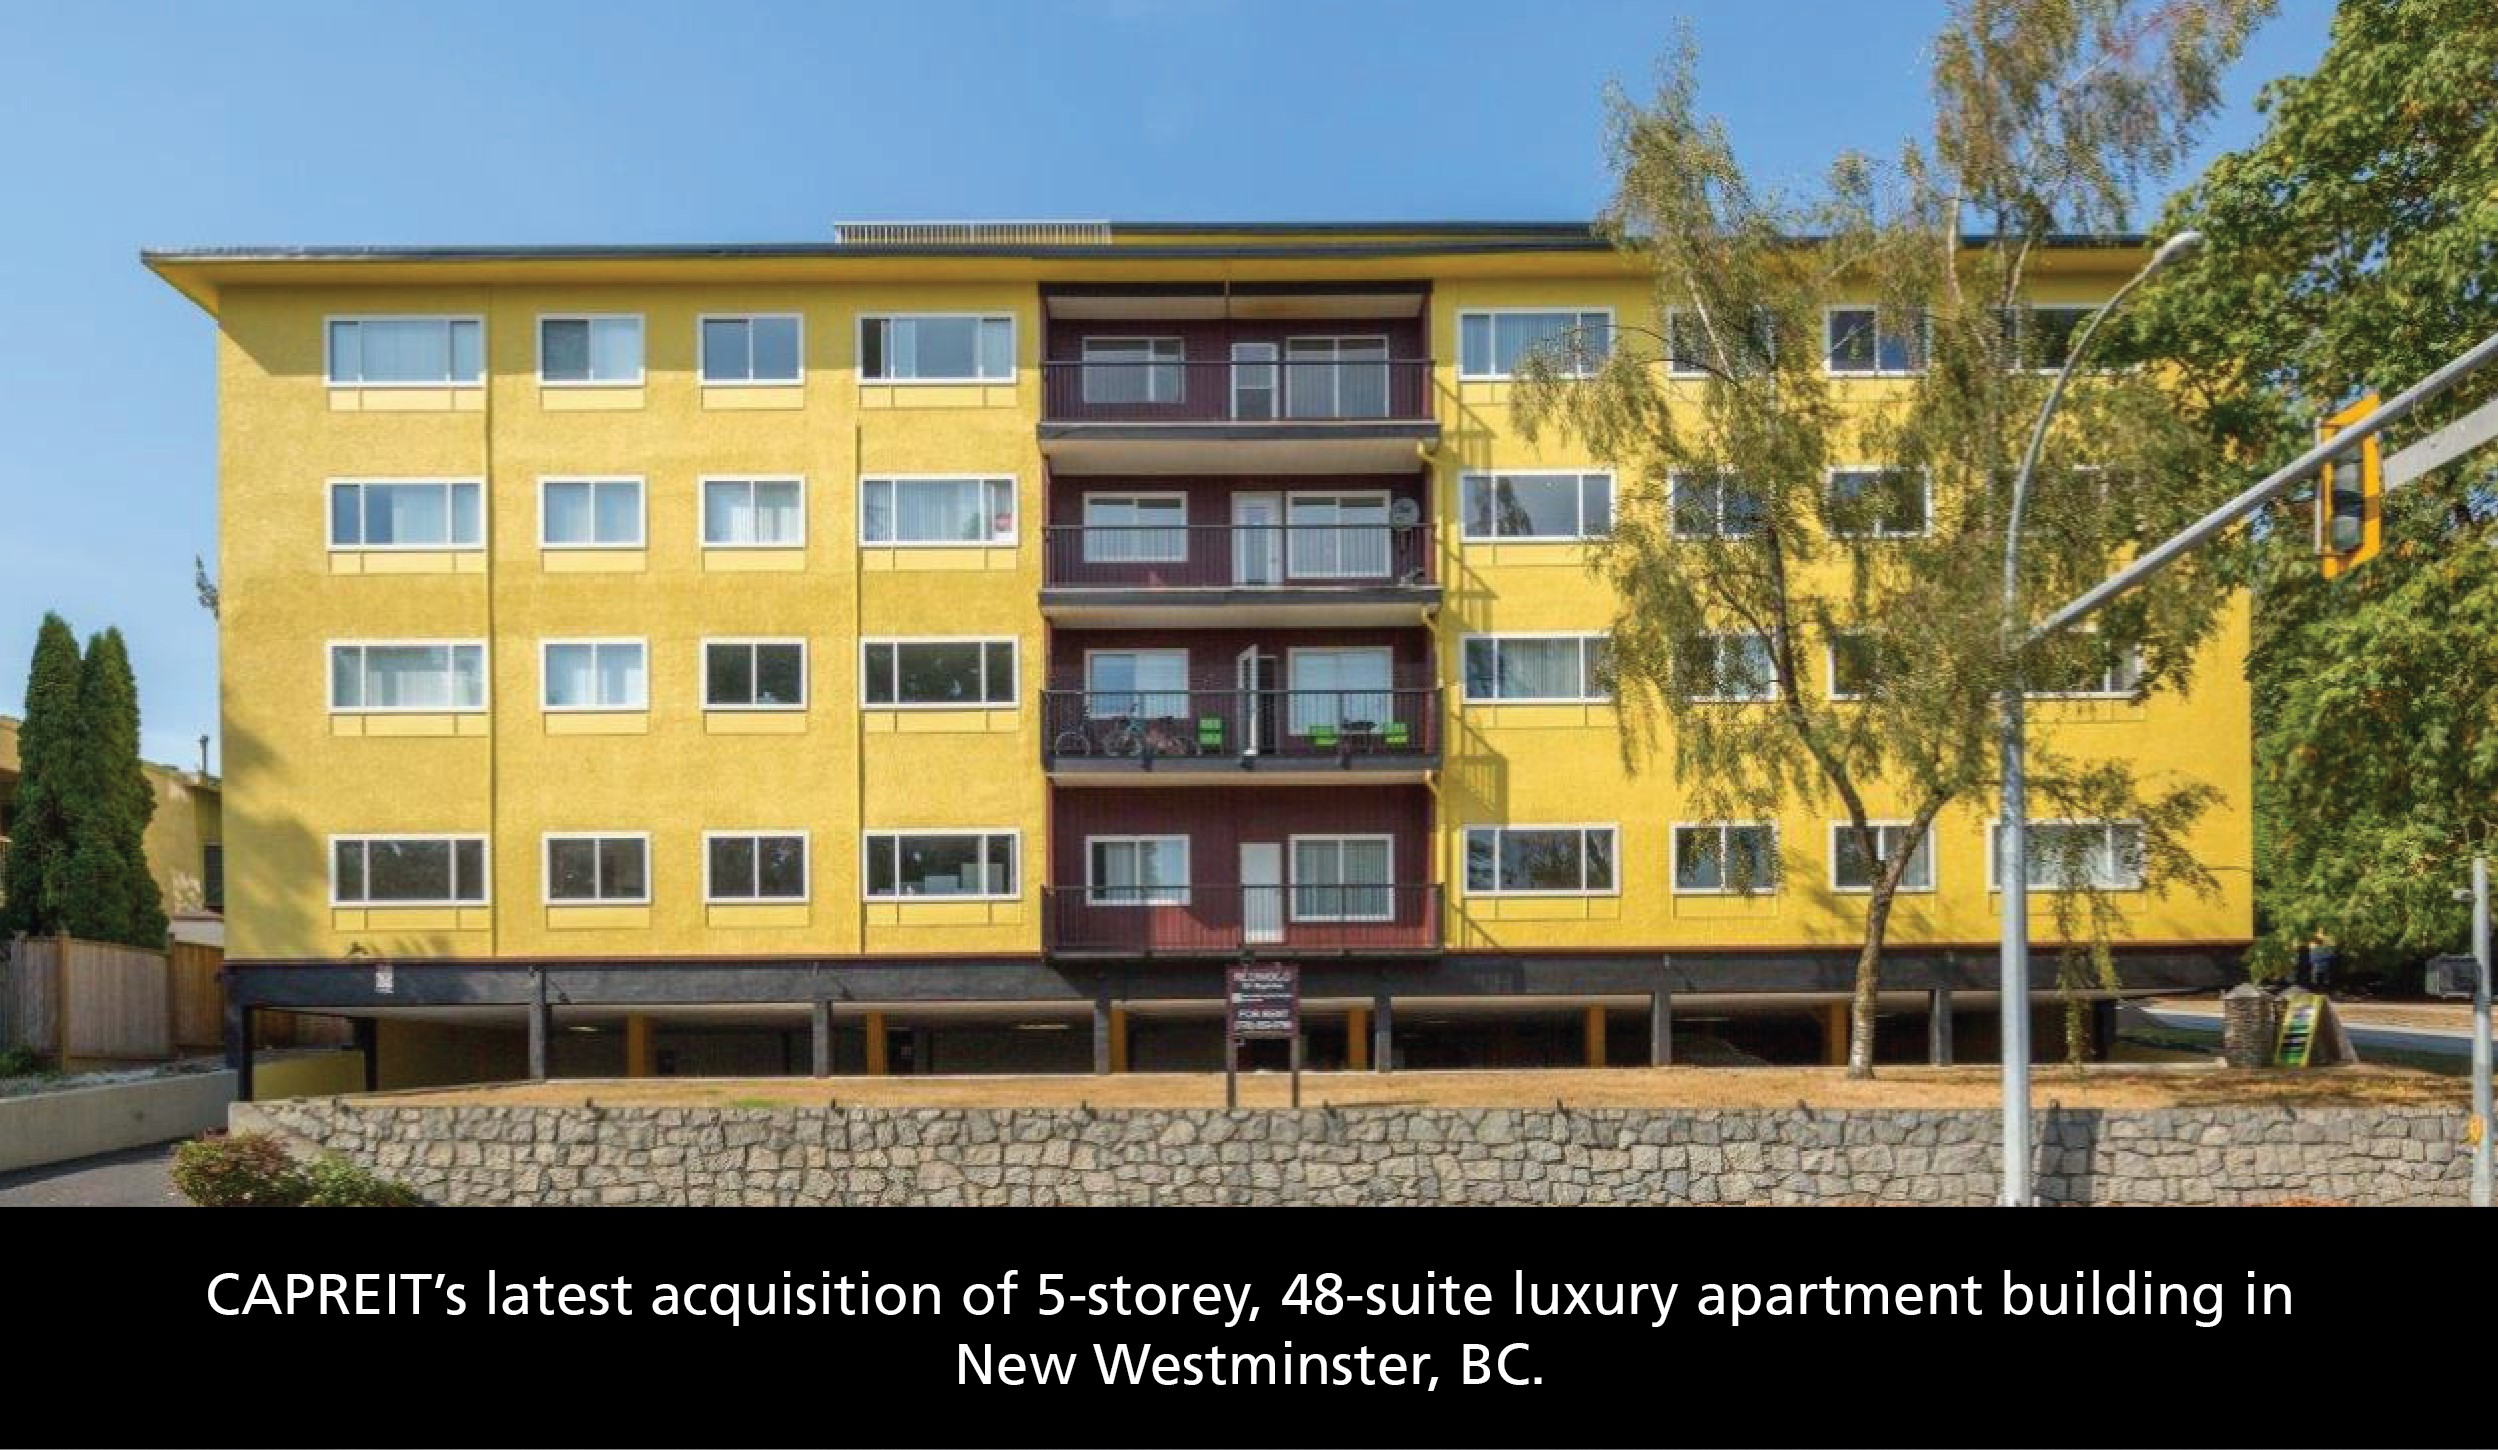 CAPREIT's latest acquisition of 5-storey, 48-suite luxury apartment building in New Westminster, BC.: CAPREIT